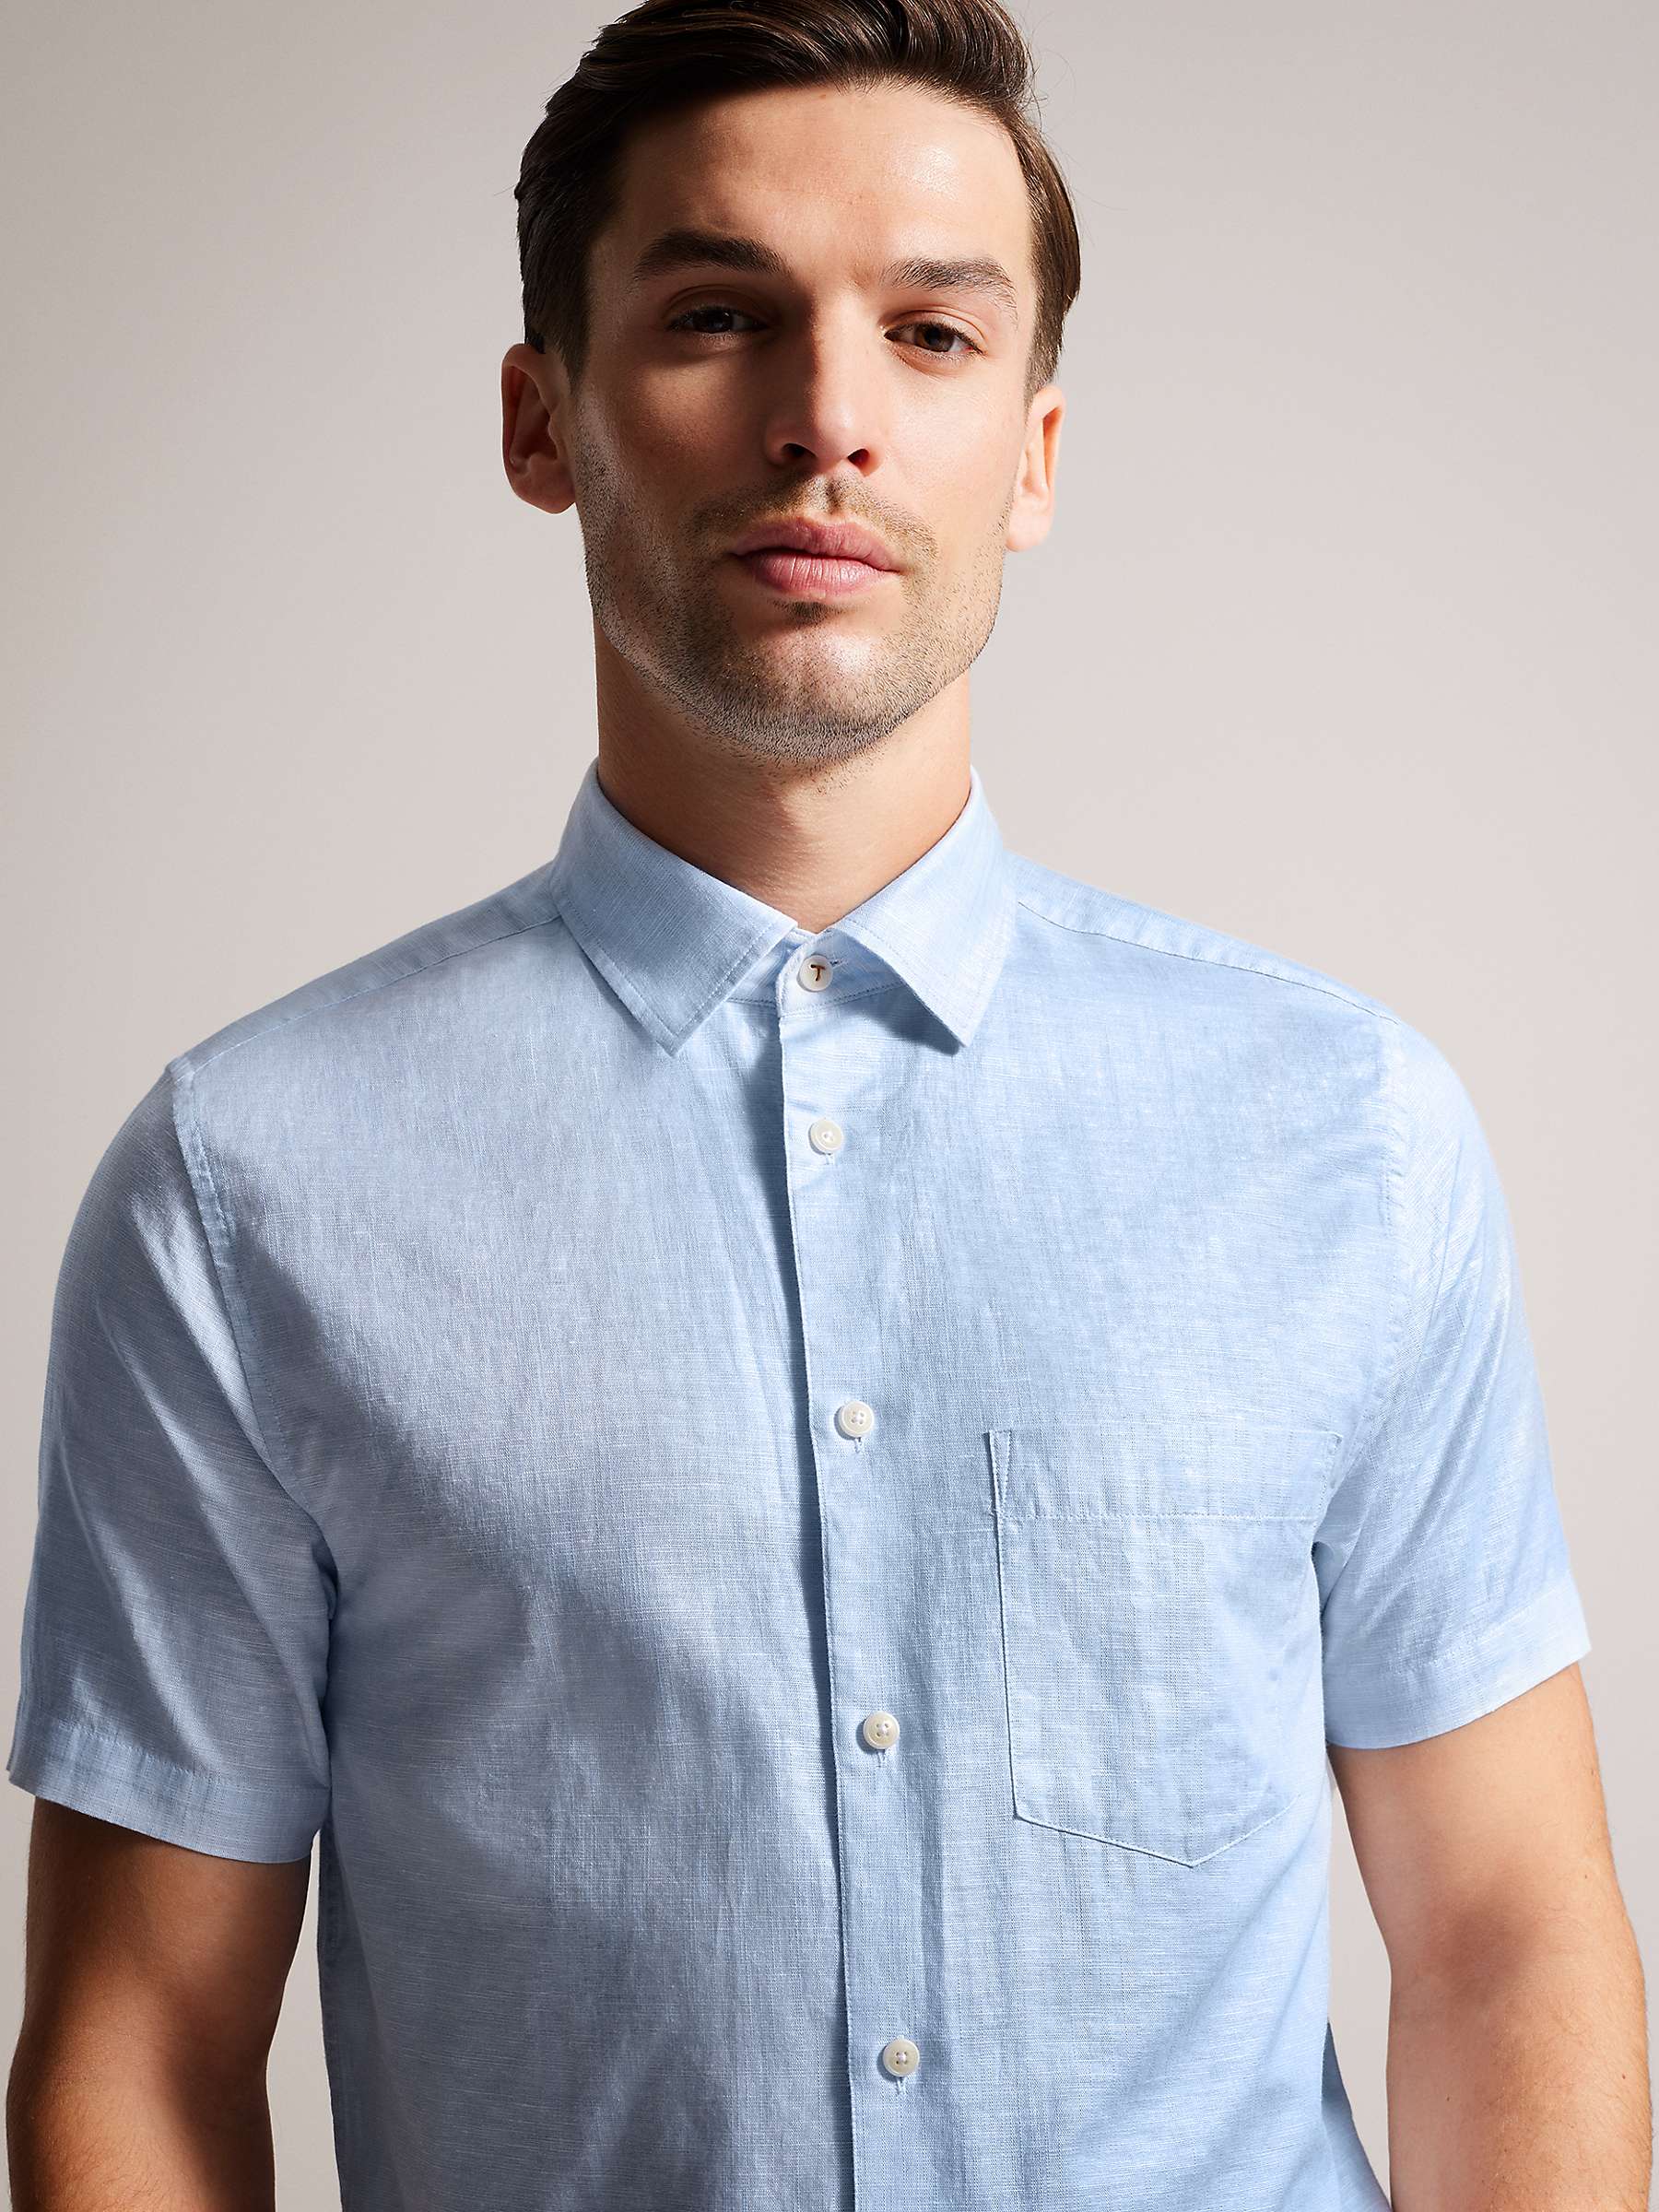 Ted Baker Kingfrd Linen Shirt, Light Blue at John Lewis & Partners